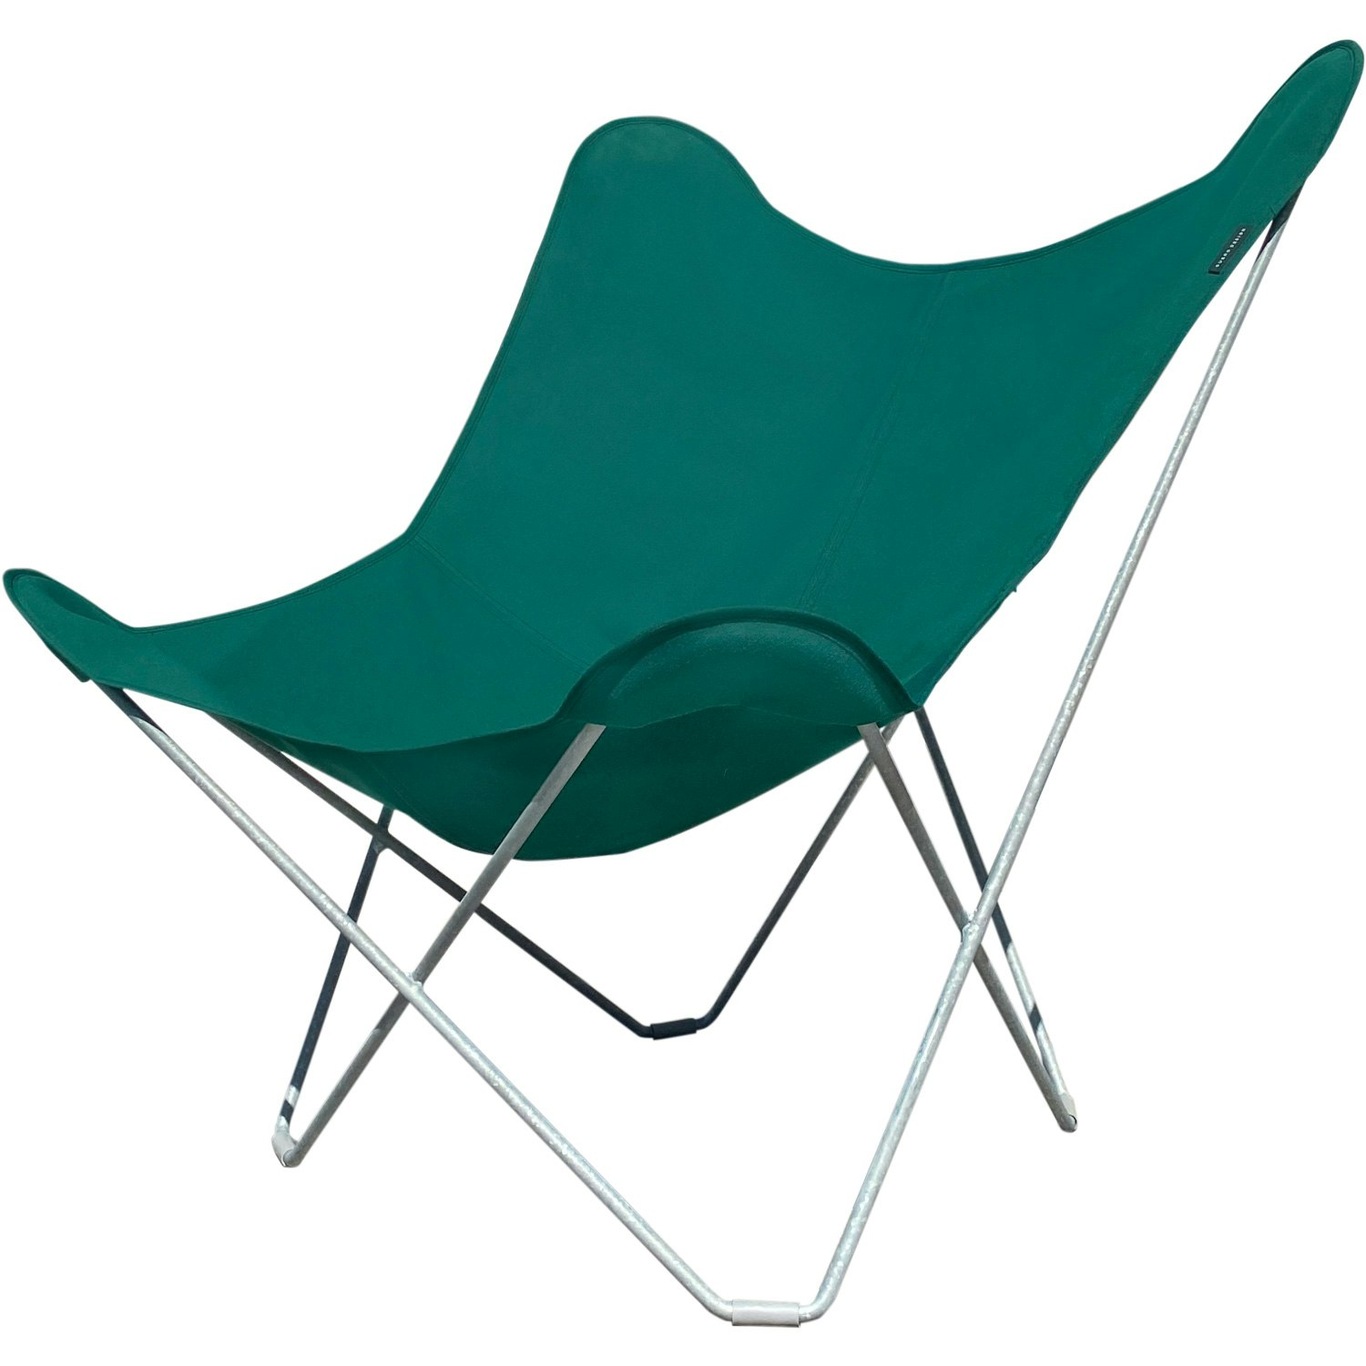 Sunshine Mariposa Lounge Chair, Forest Green / Chrome